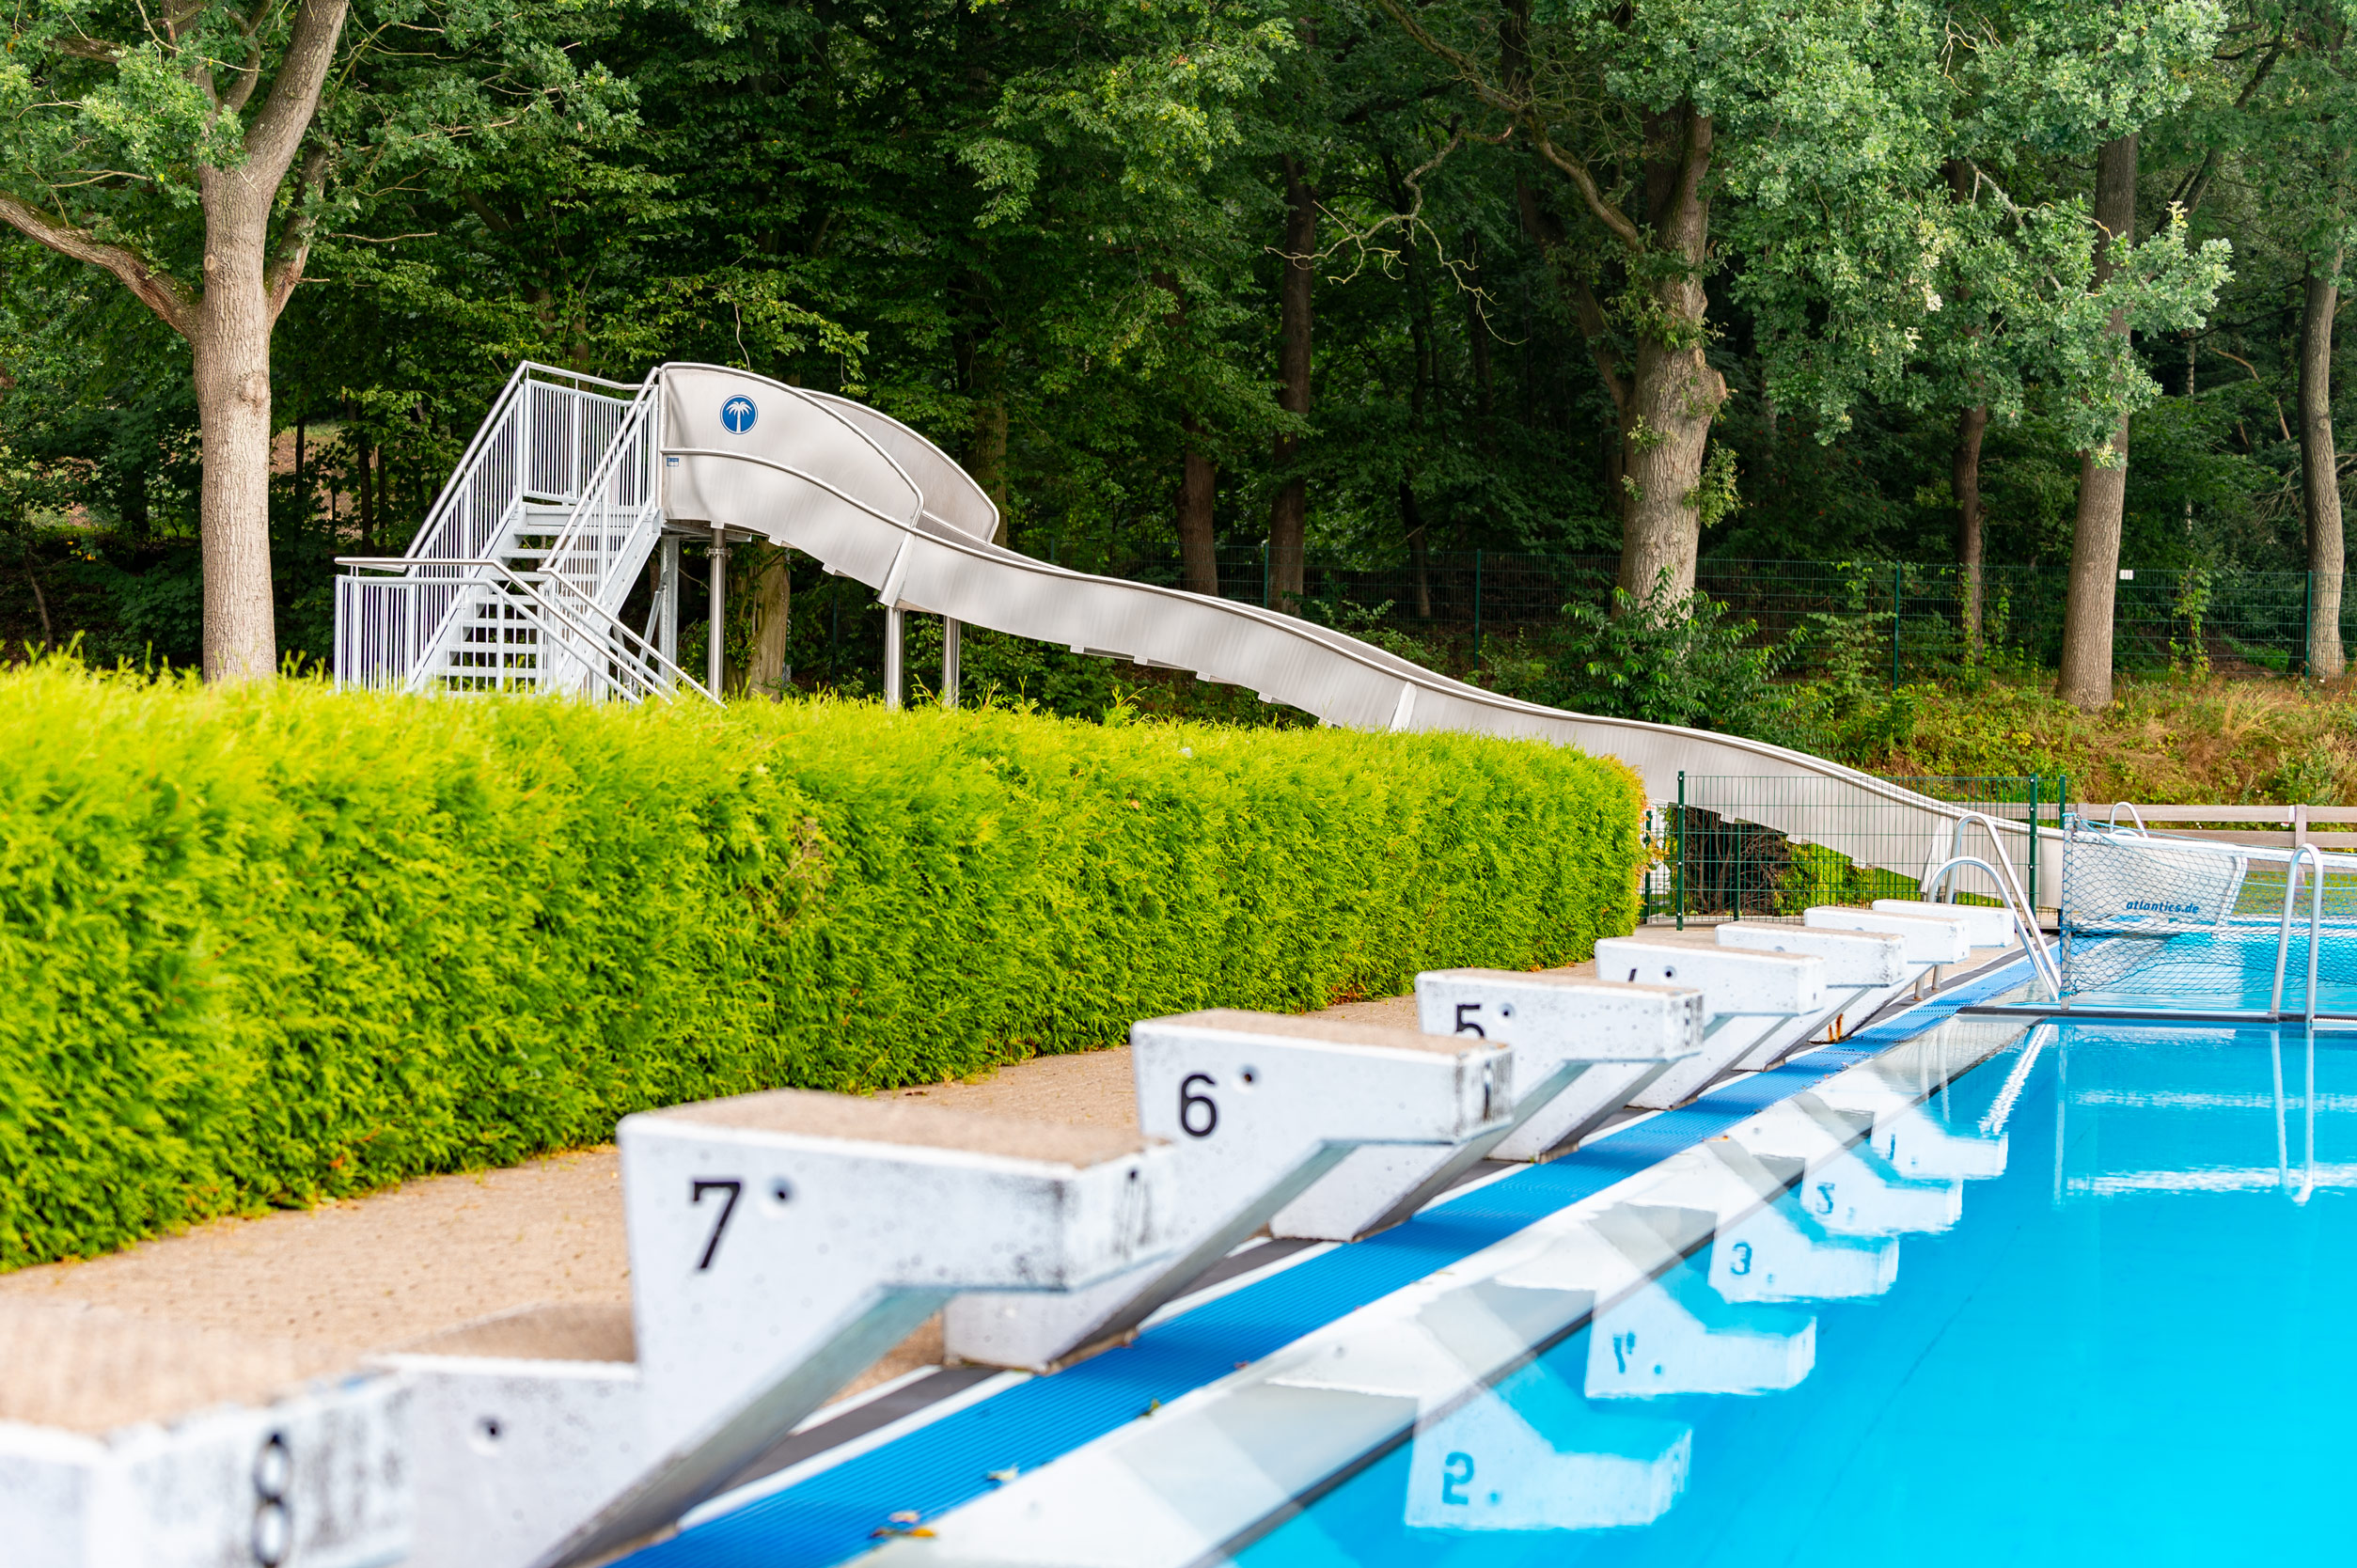 atlantics stainless steel slides open air swimming pool wacken schleswig holstein wide waves boxwater 188506